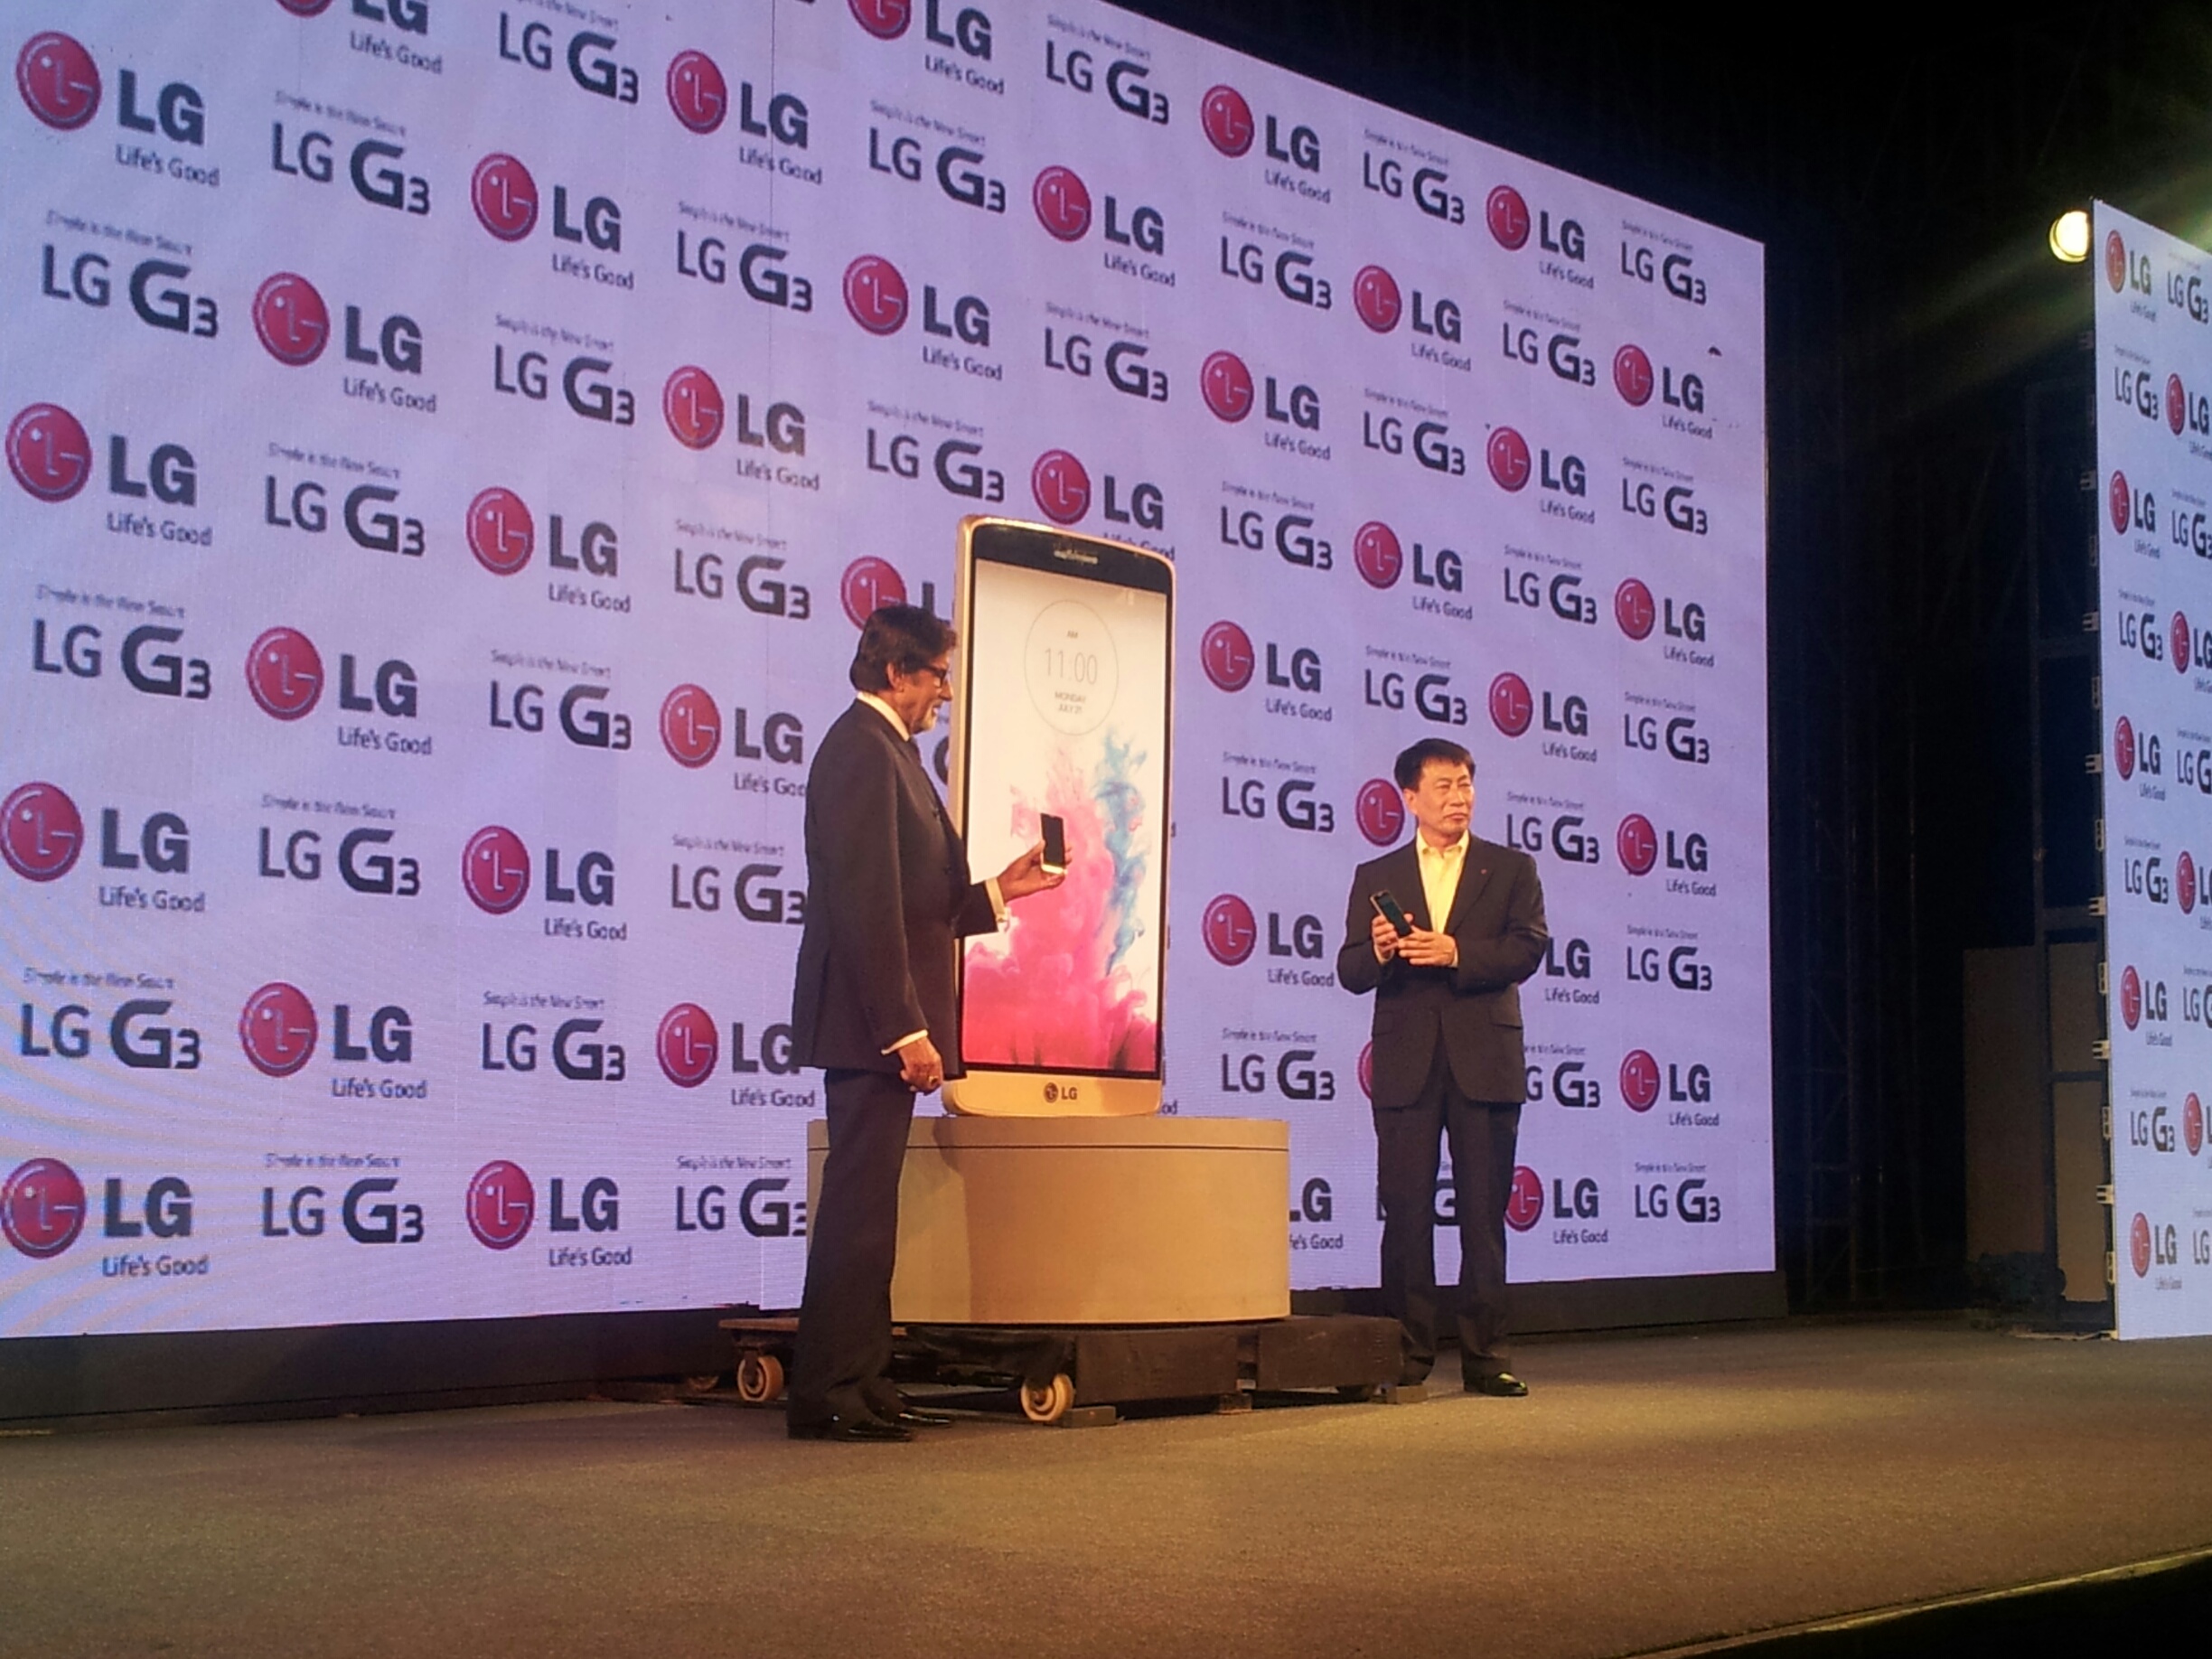 Big B with LG G3